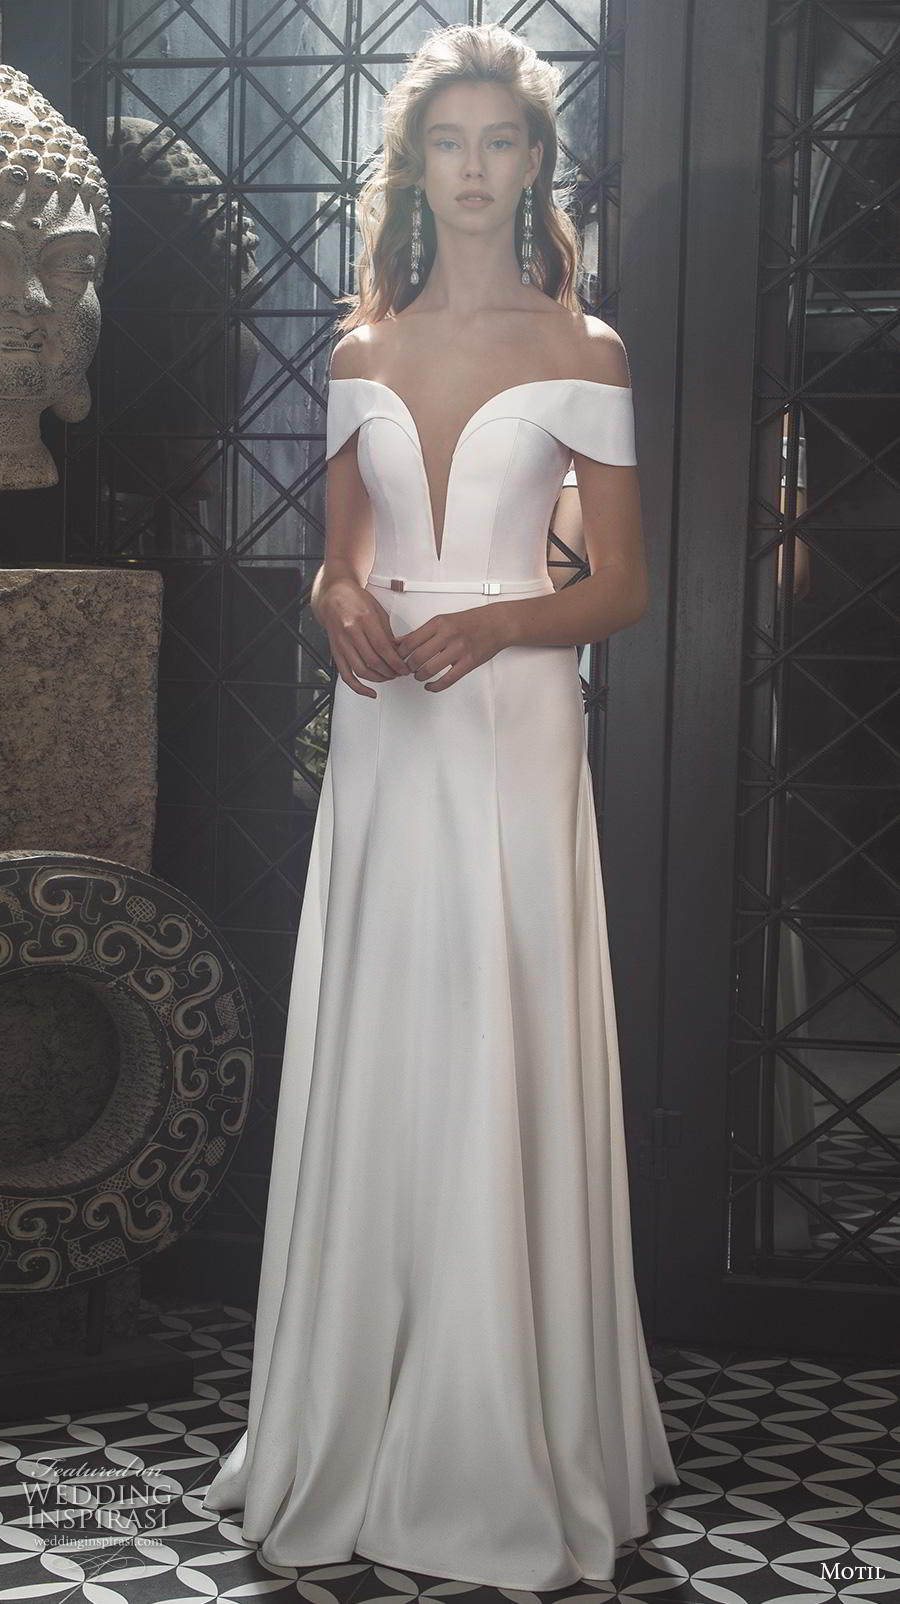 Motil 2019 Wedding Dresses — “Roots” Bridal Collection | Wedding Inspirasi